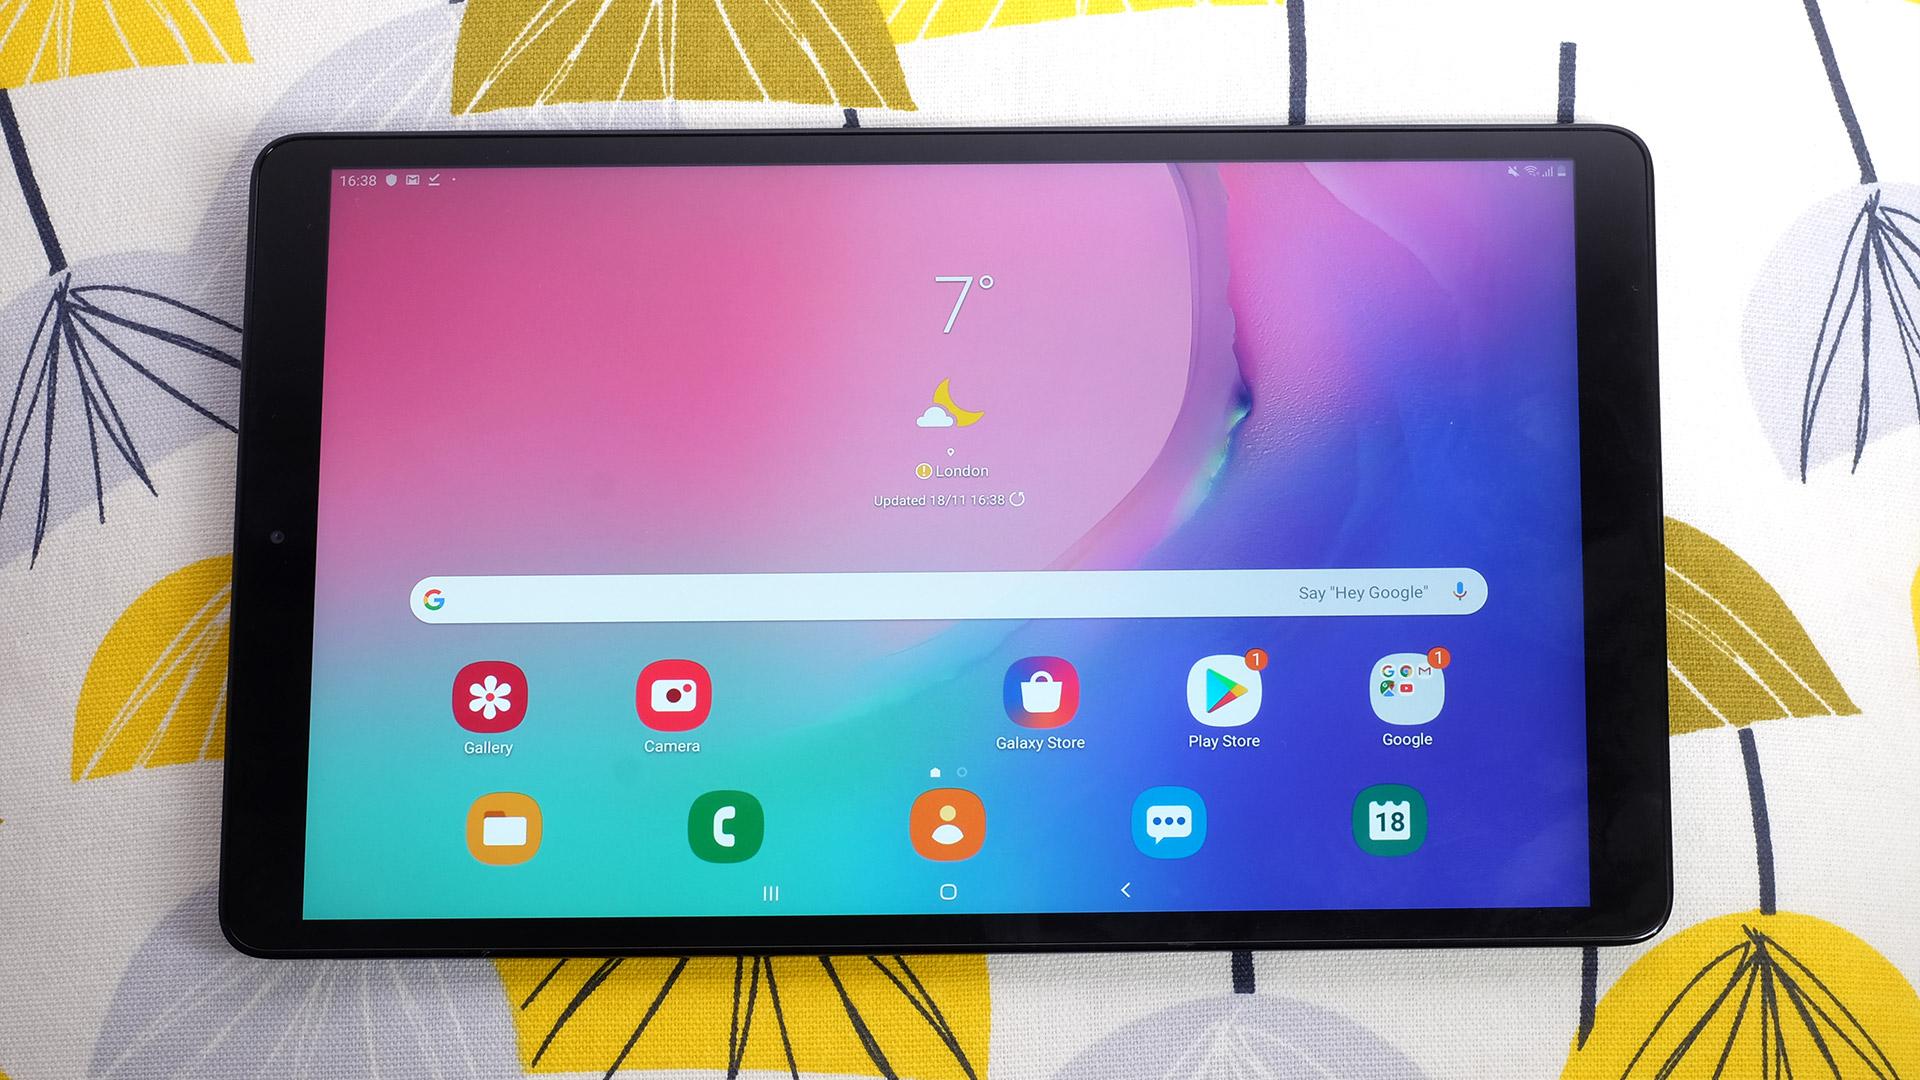  Samsung Galaxy Tab A 10.1 (2019) - Dépassée, mais toujours efficace